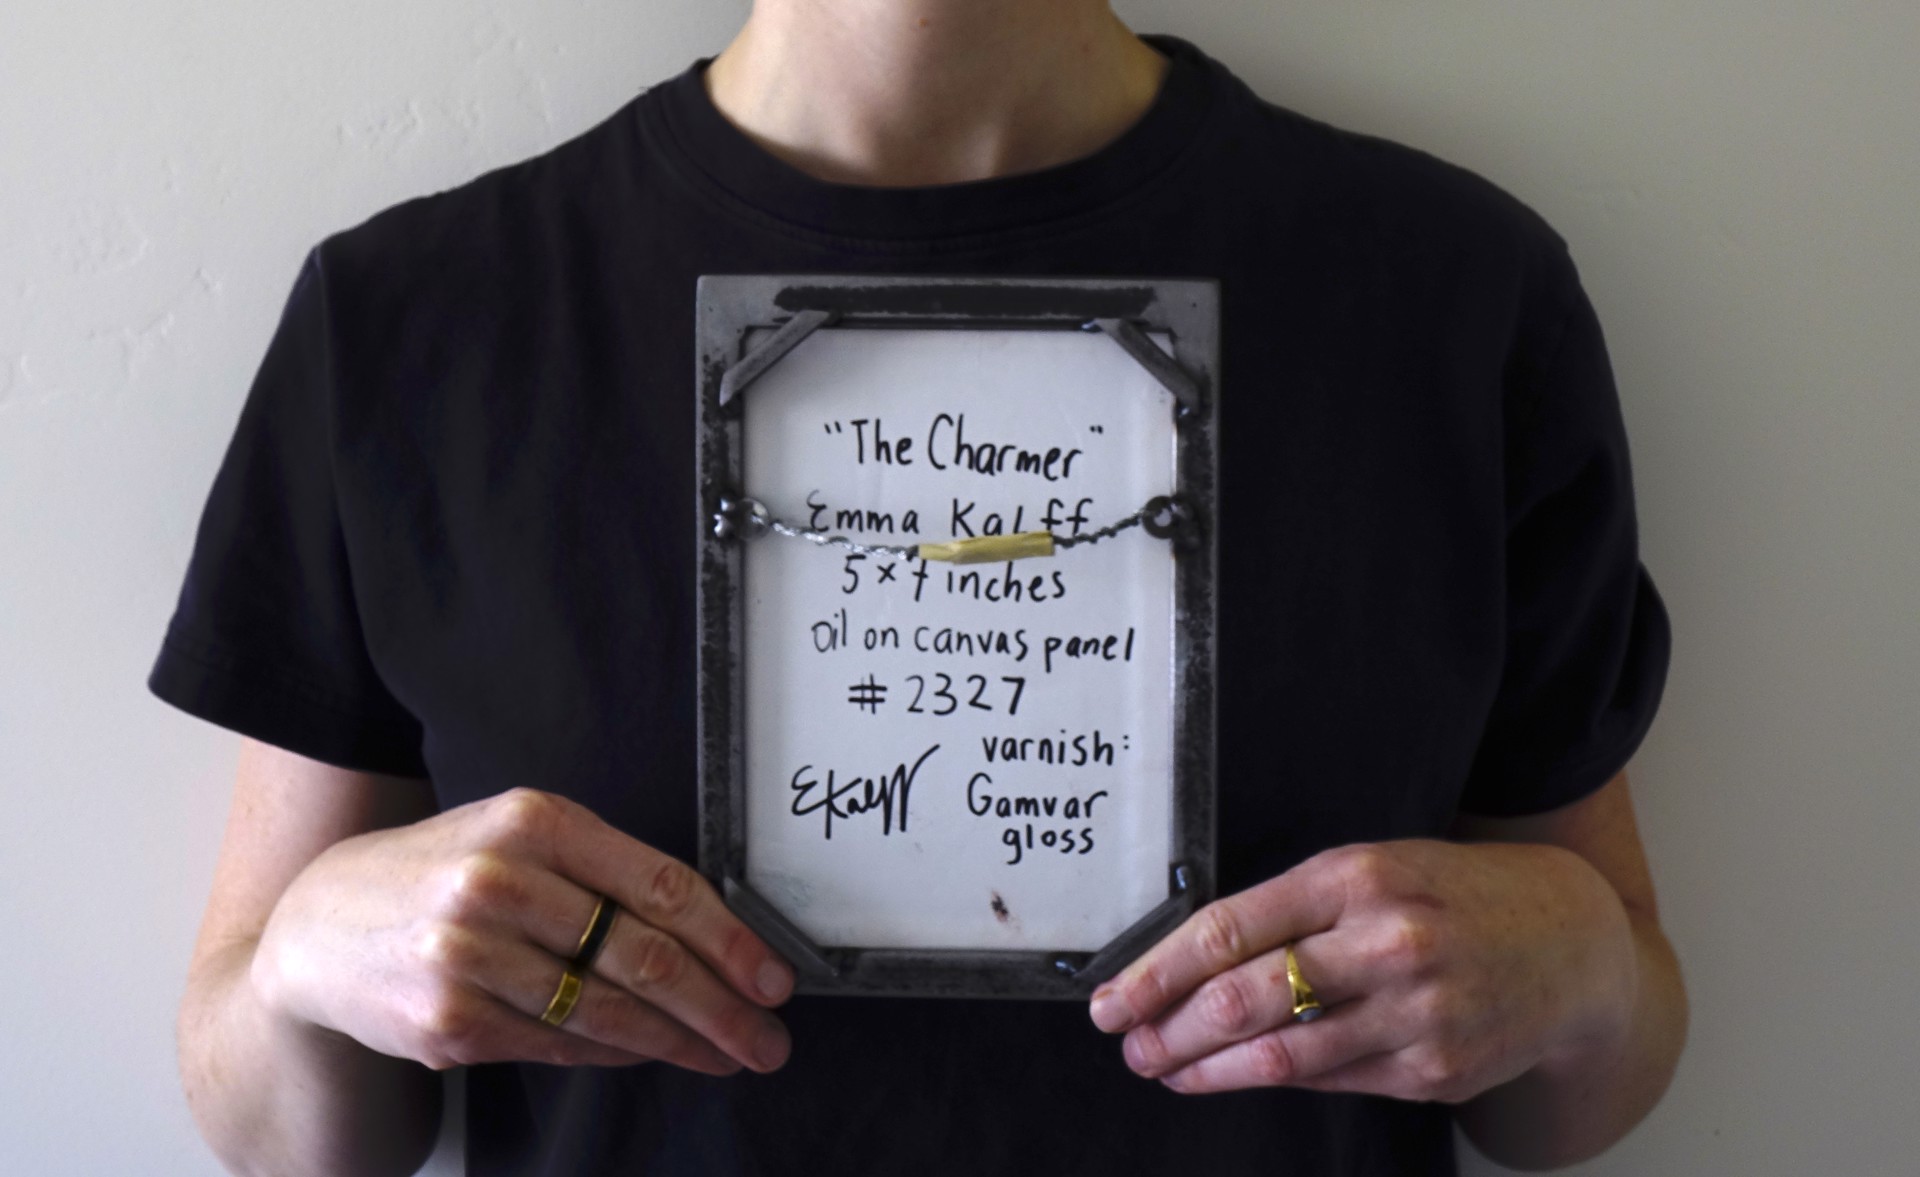 The Charmer by Emma Kalff